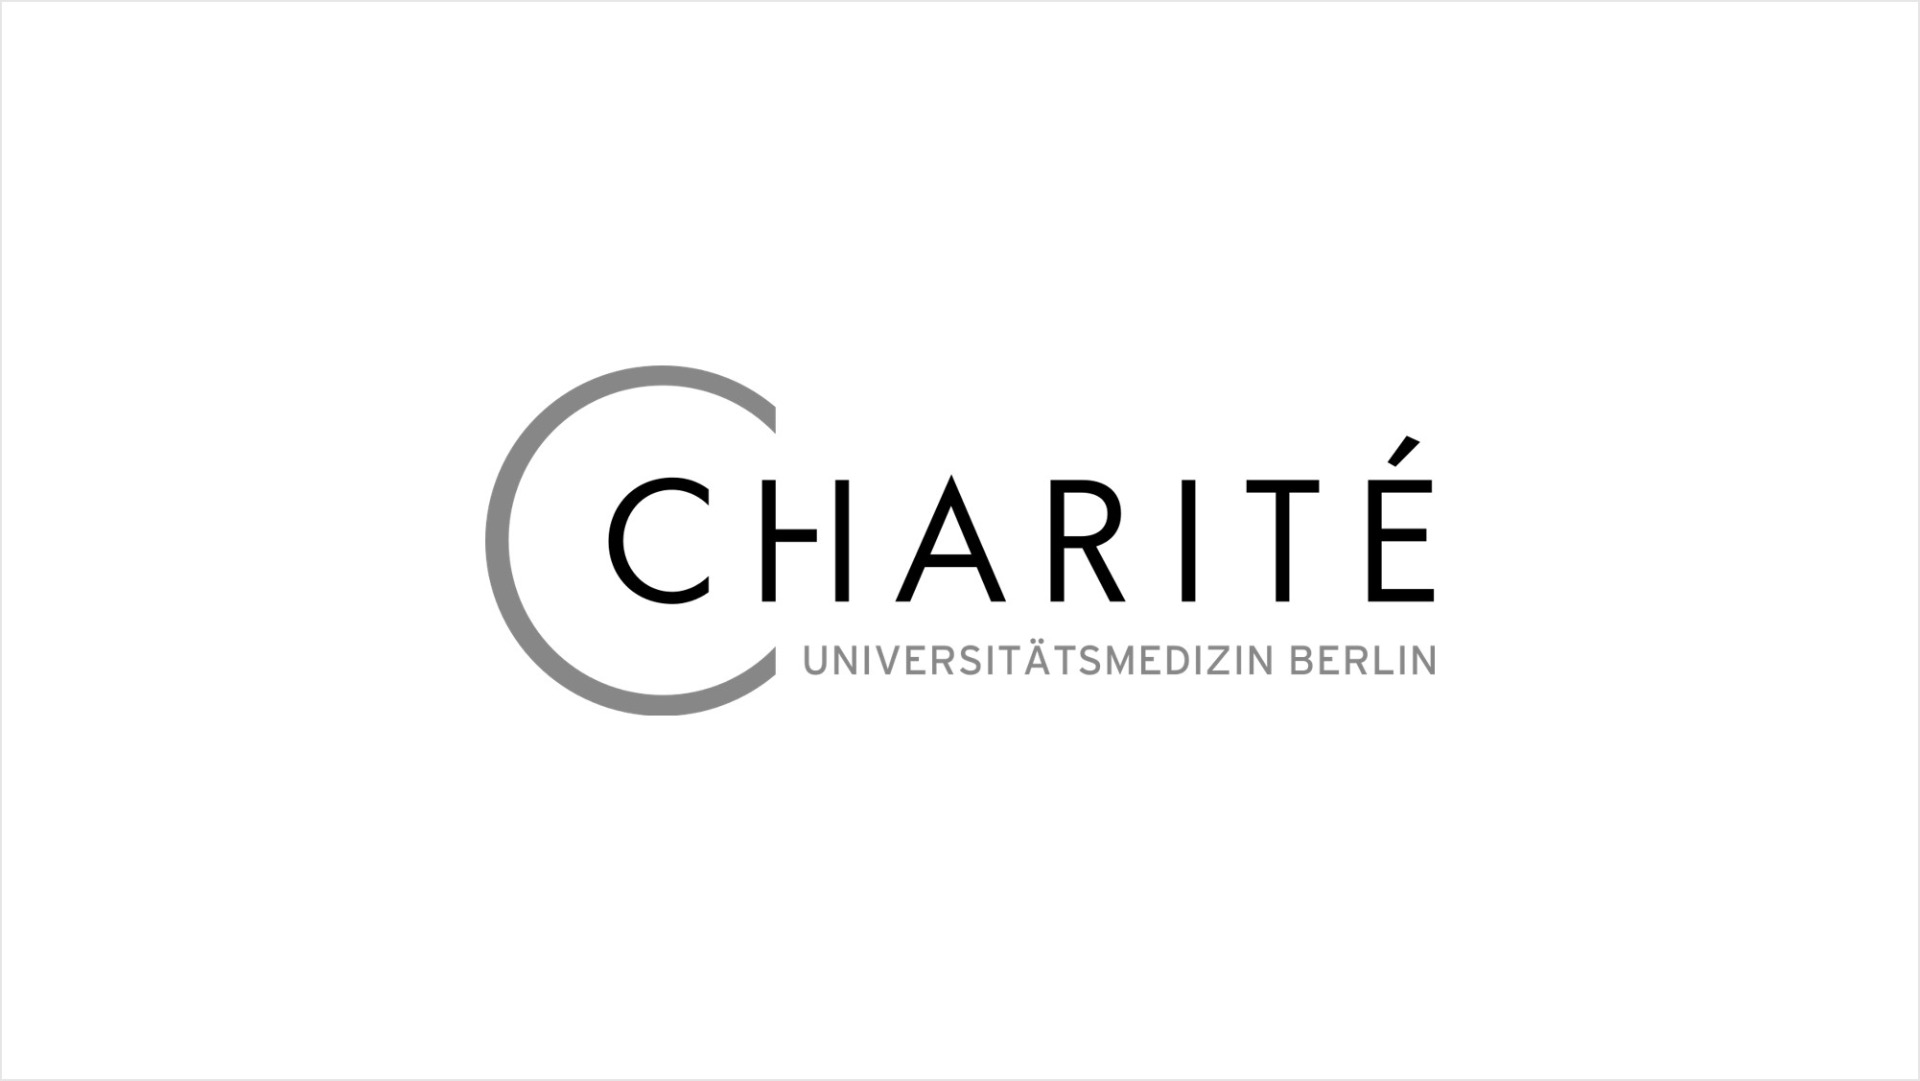 Charité Universitätsmedizin Berlin